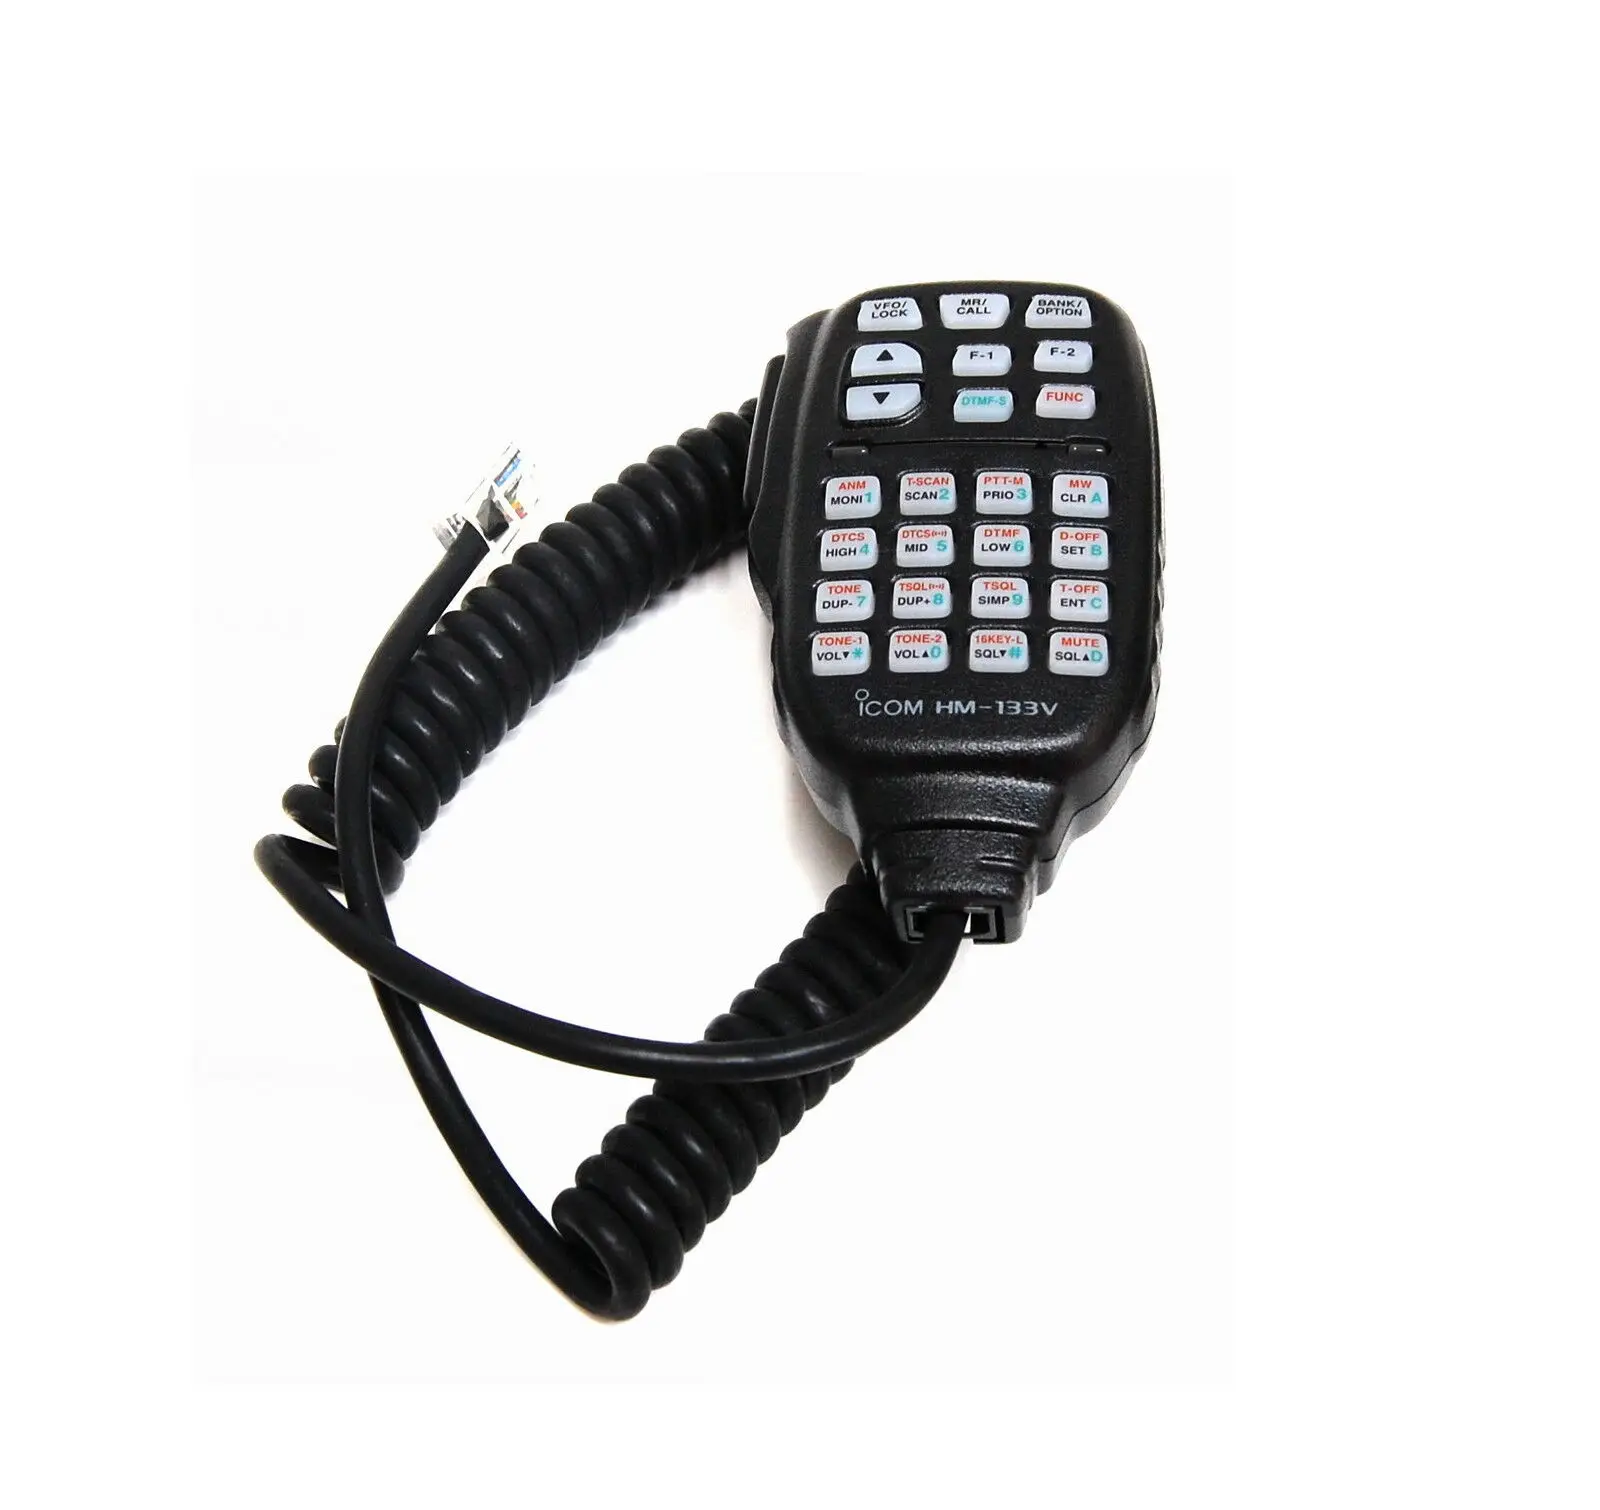 NEW IC-2300H VHF 65W EXP TX/RX 136-174 vhf Transceiver Mobile Radio